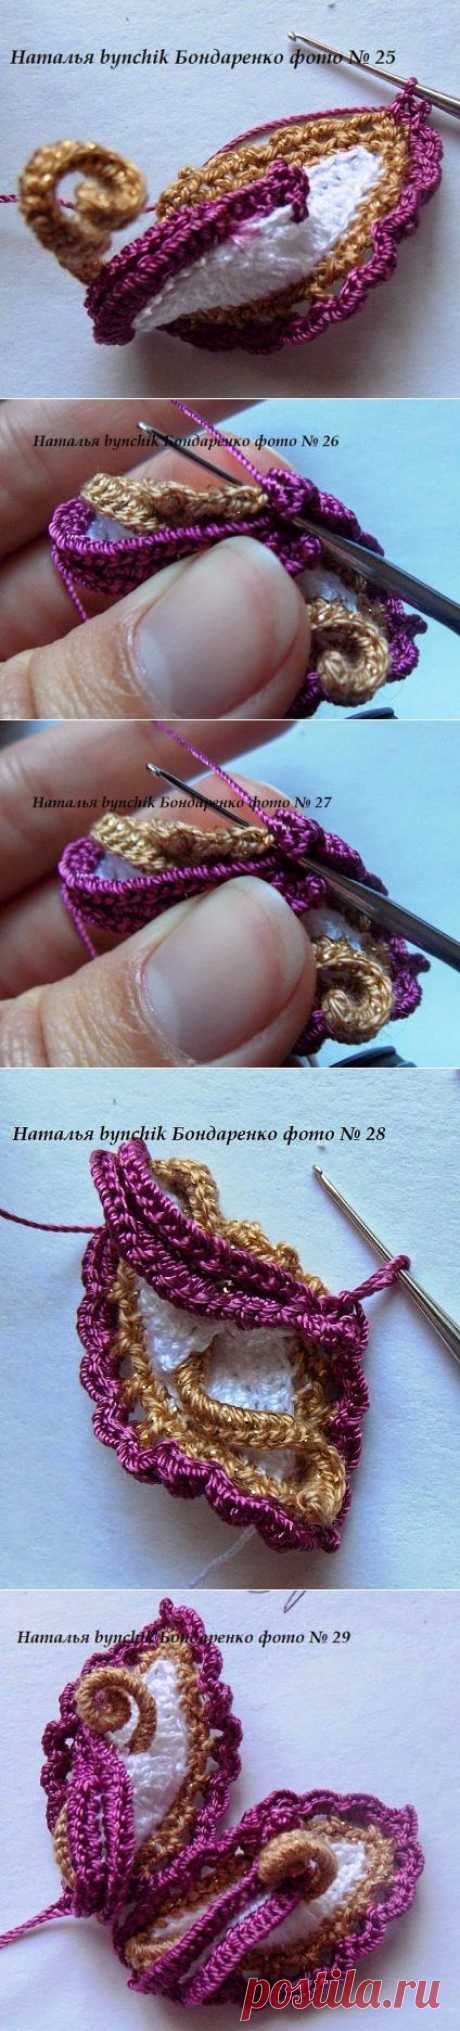 Irish crochet &amp;: Цветок и листик от Натальи Бондаренко. МК.